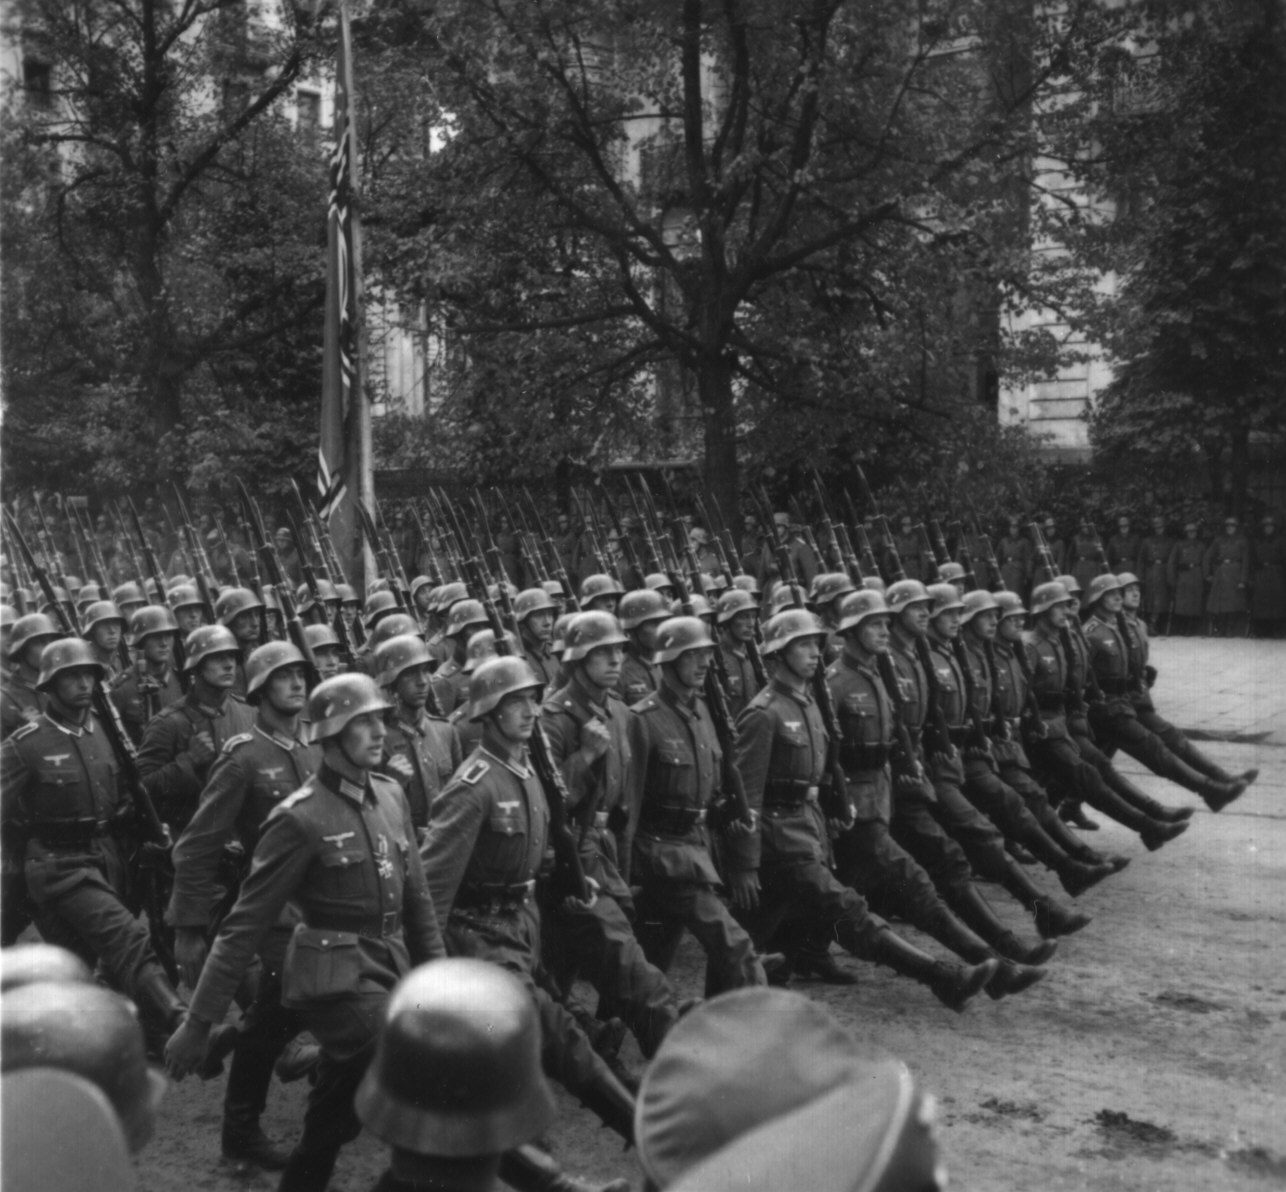 02 - German parade in Poland.jpg